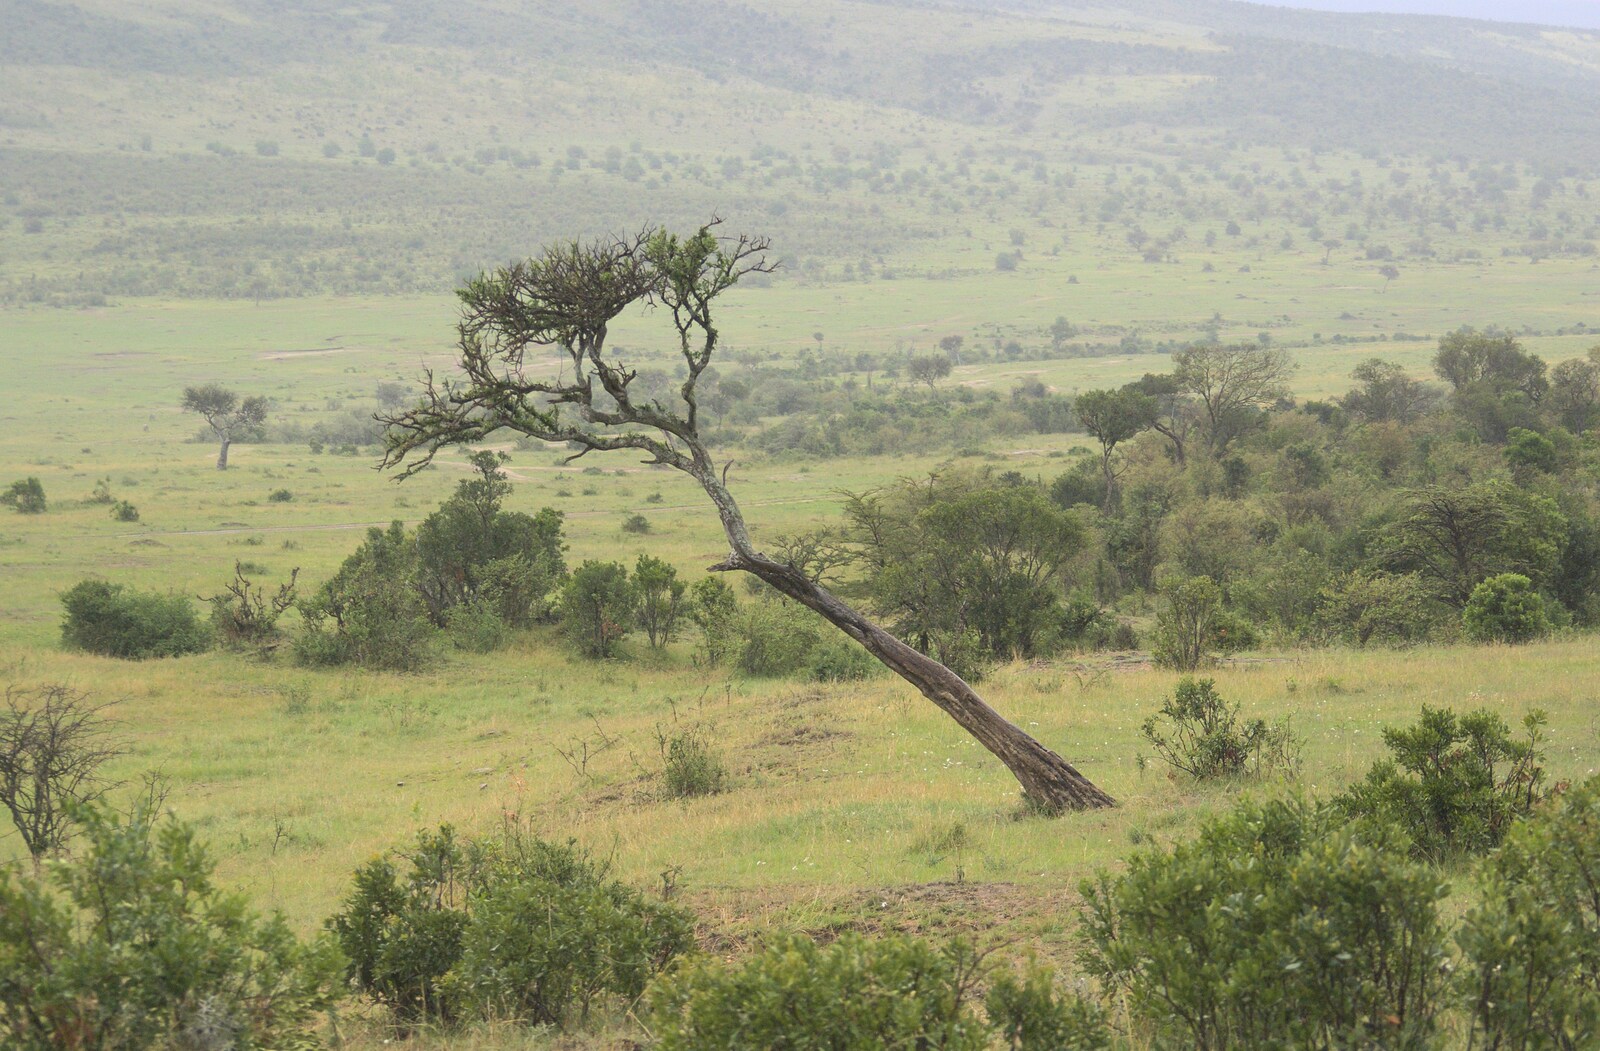 Maasai Mara Safari and a Maasai Village, Ololaimutia, Kenya - 5th November 2010: A leaning tree